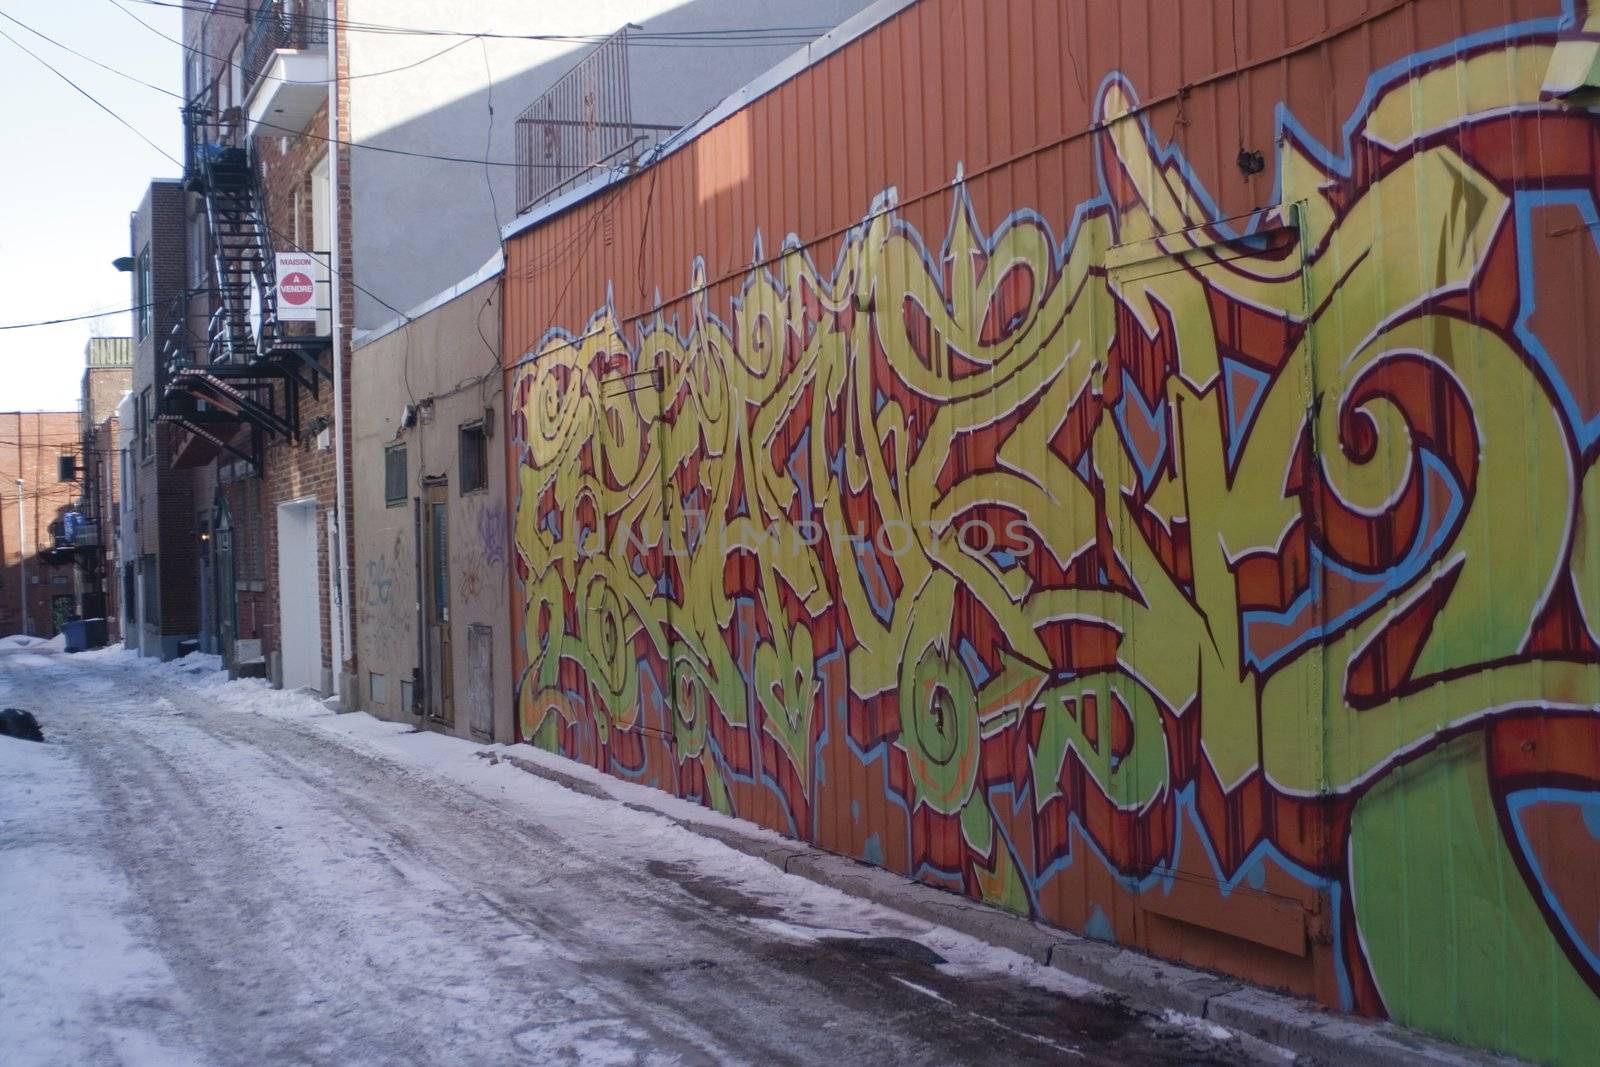 Back alley graffiti by mypstudio